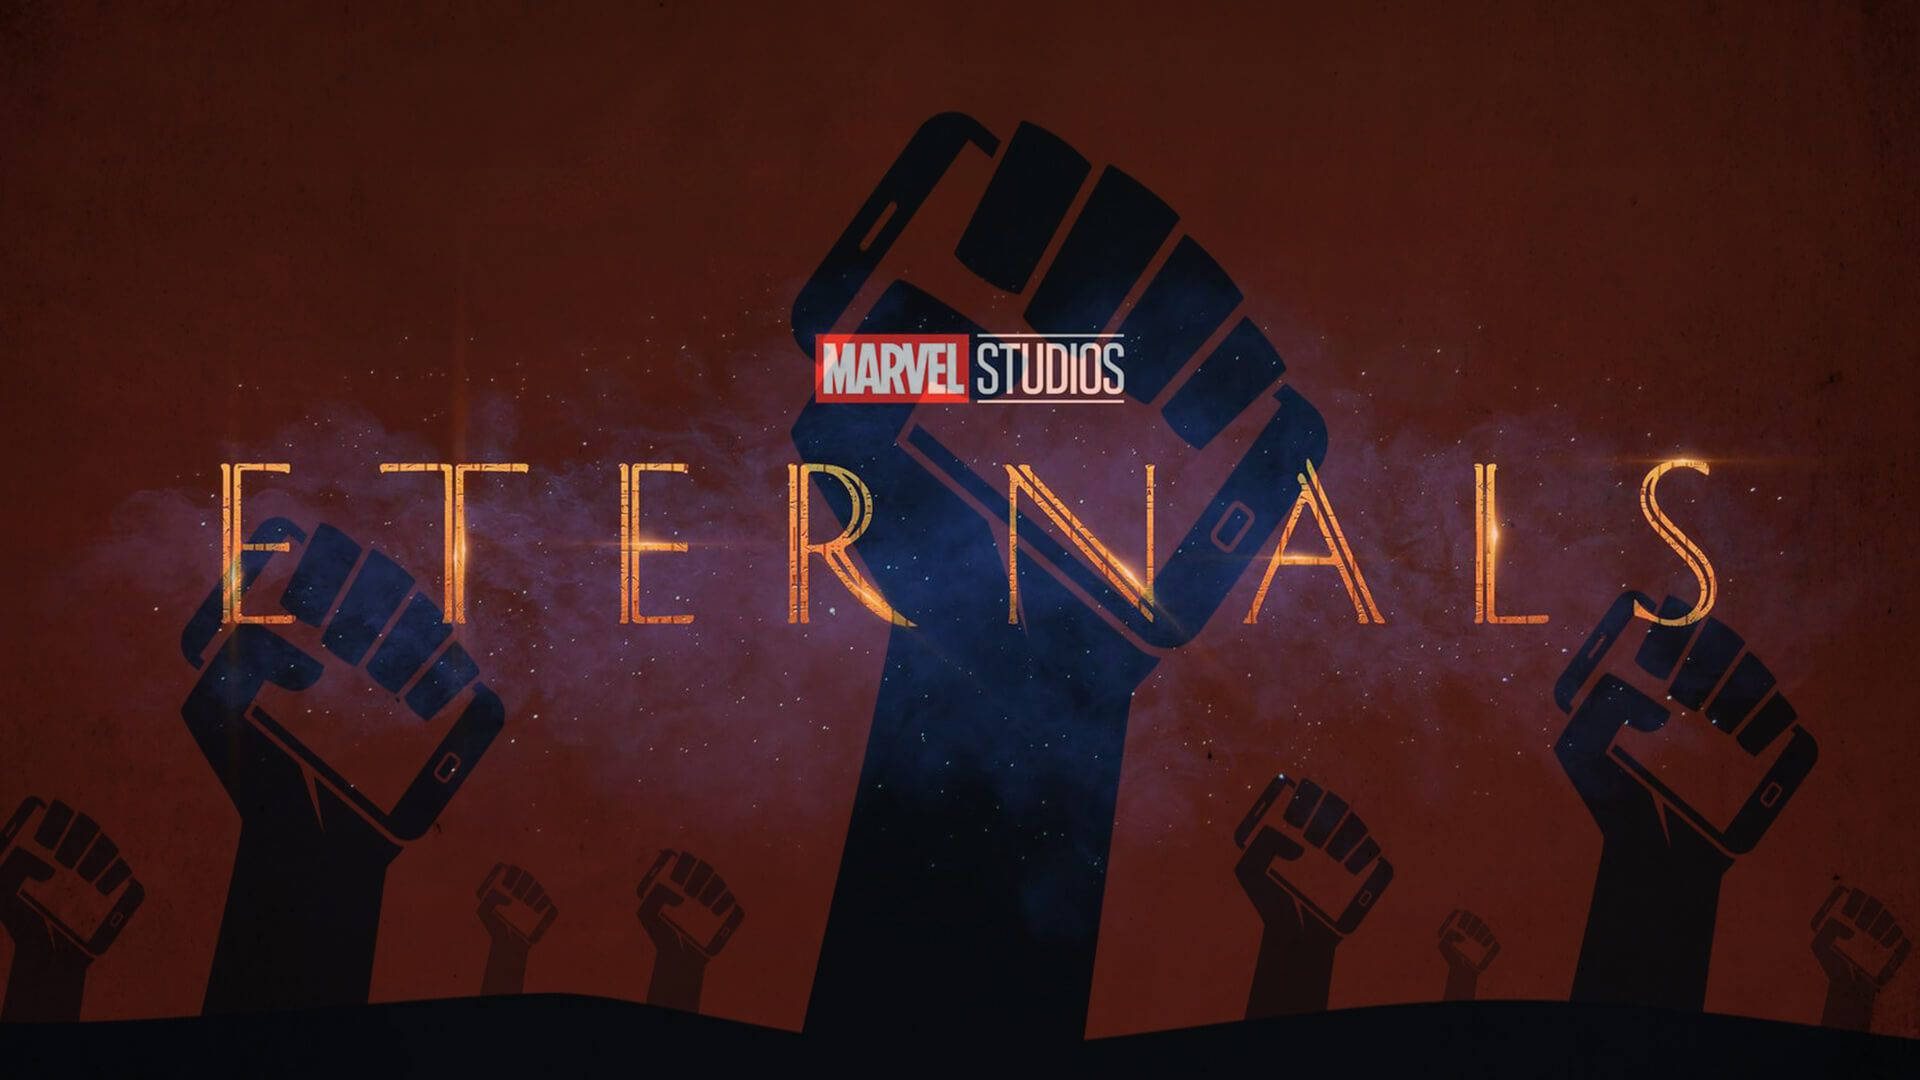 Marvel Studios Eternals Digital Poster Wallpaper